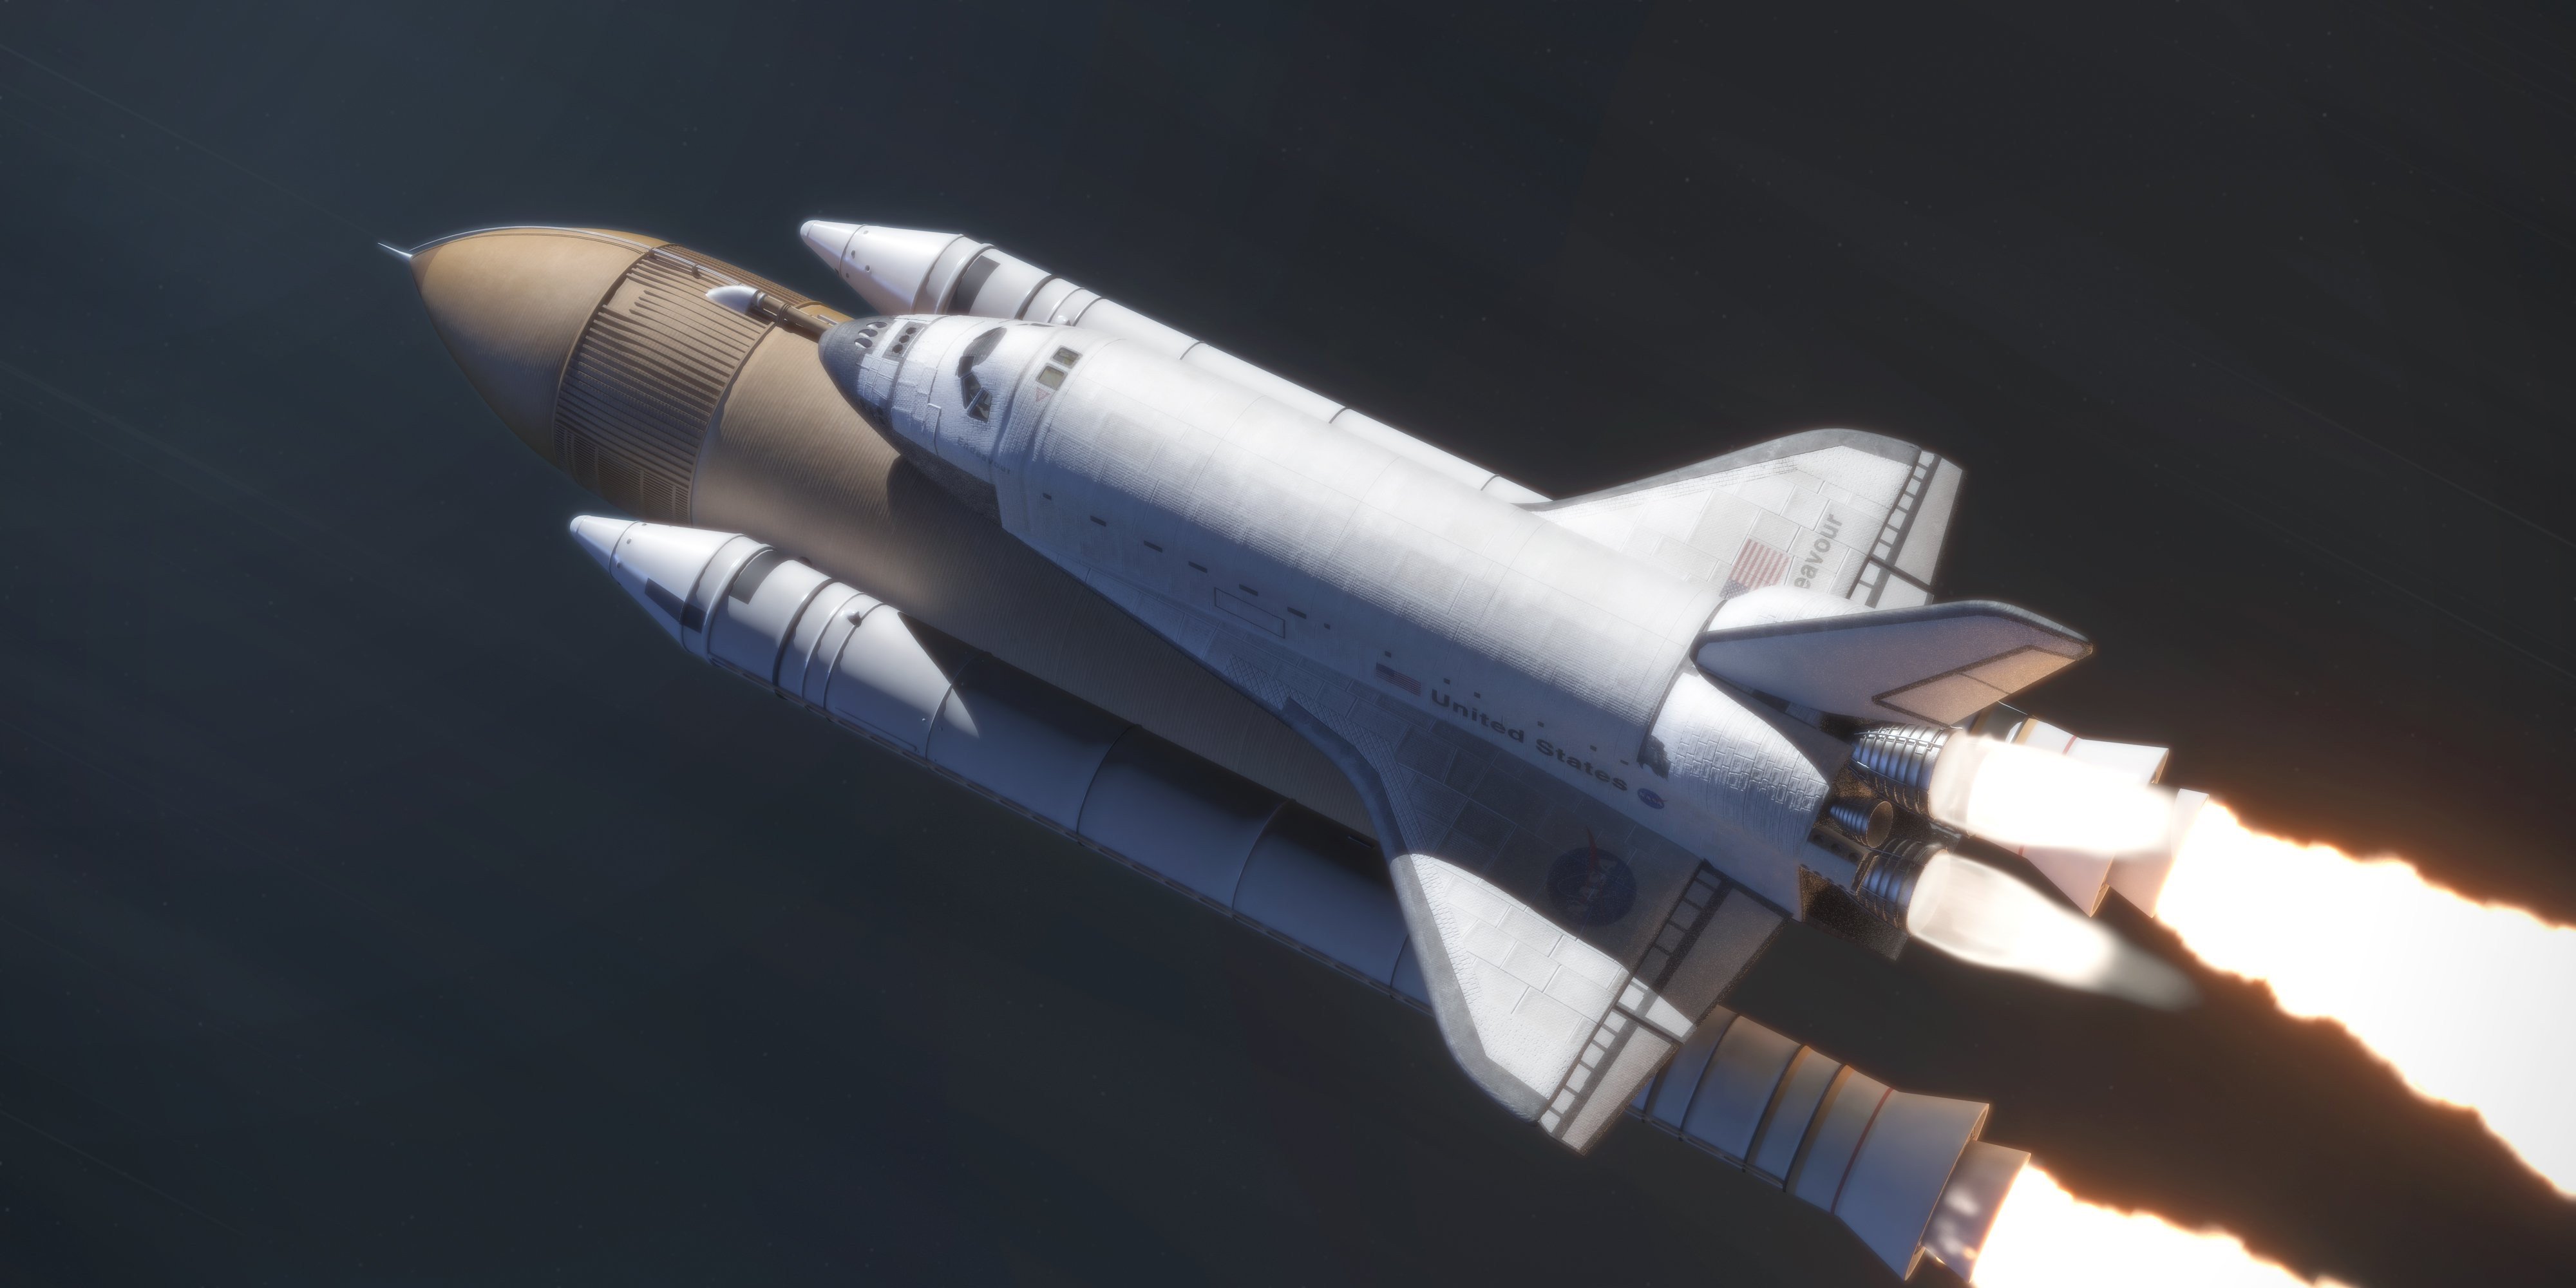 spaceship, Space Shuttle Endeavour, Space shuttle, NASA Wallpaper